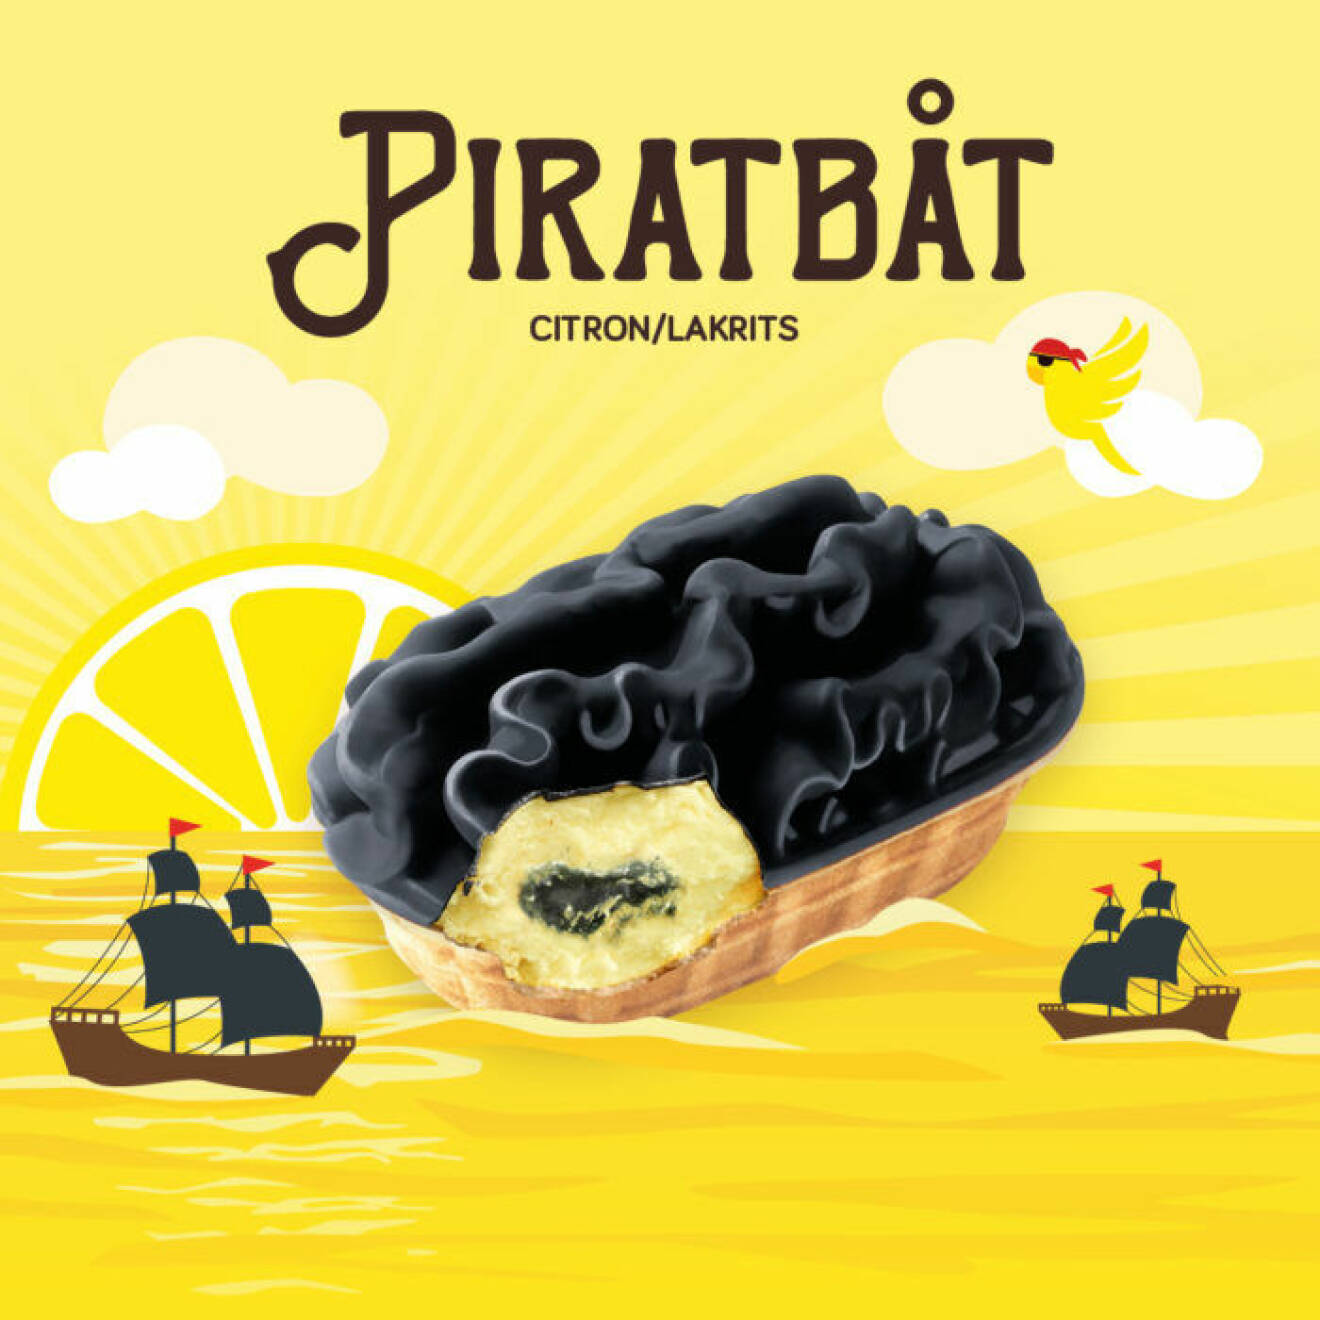 Piratbåt citron lakrits